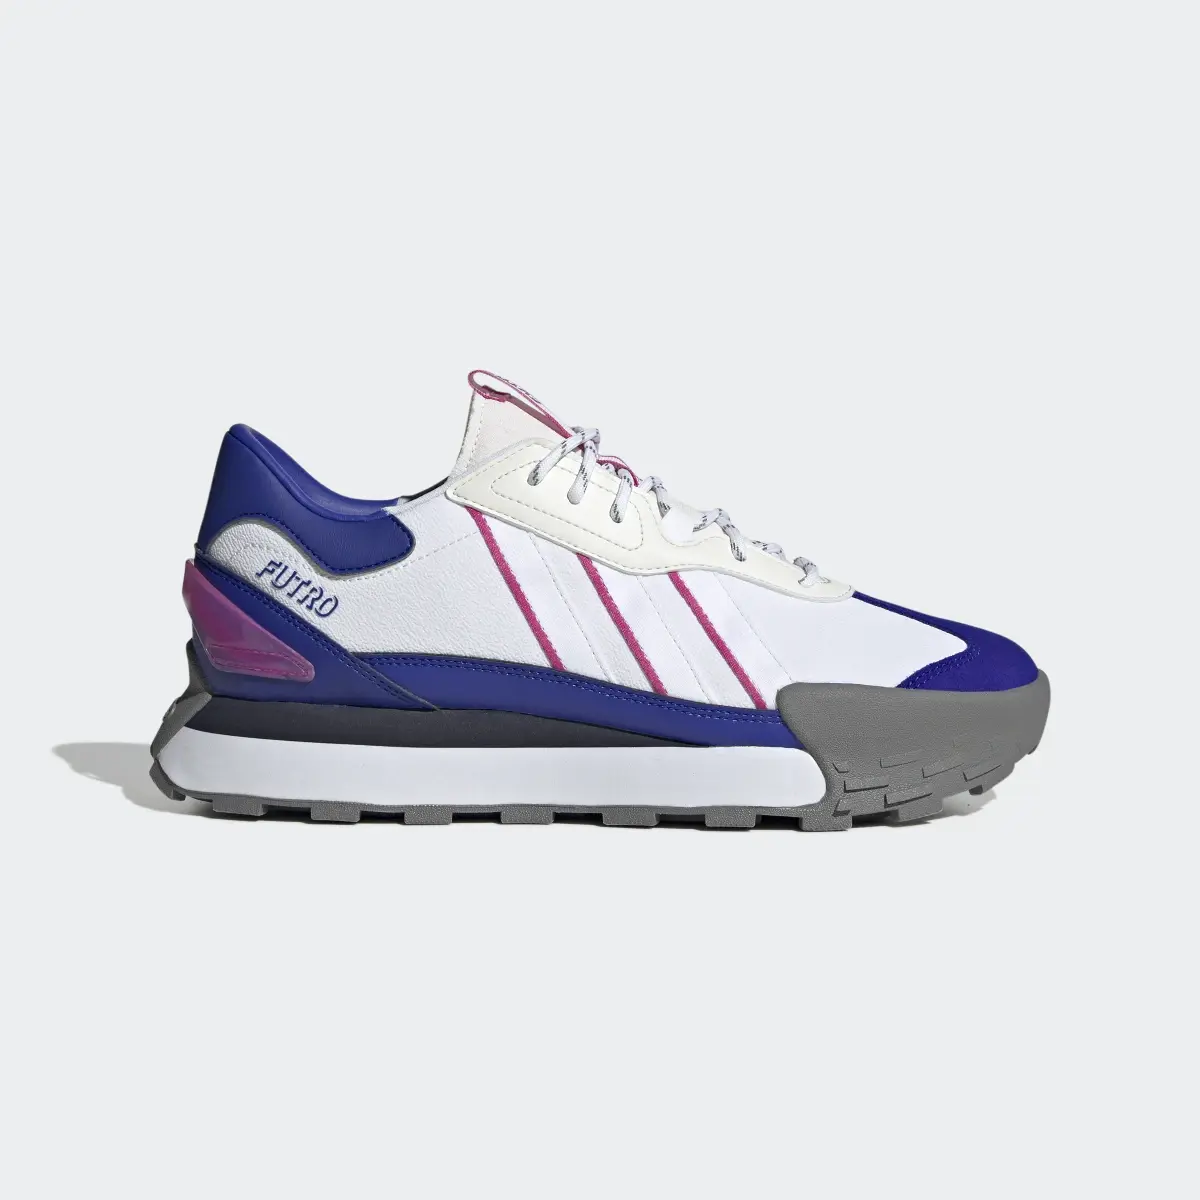 Adidas Futro Mixr Schuh. 2